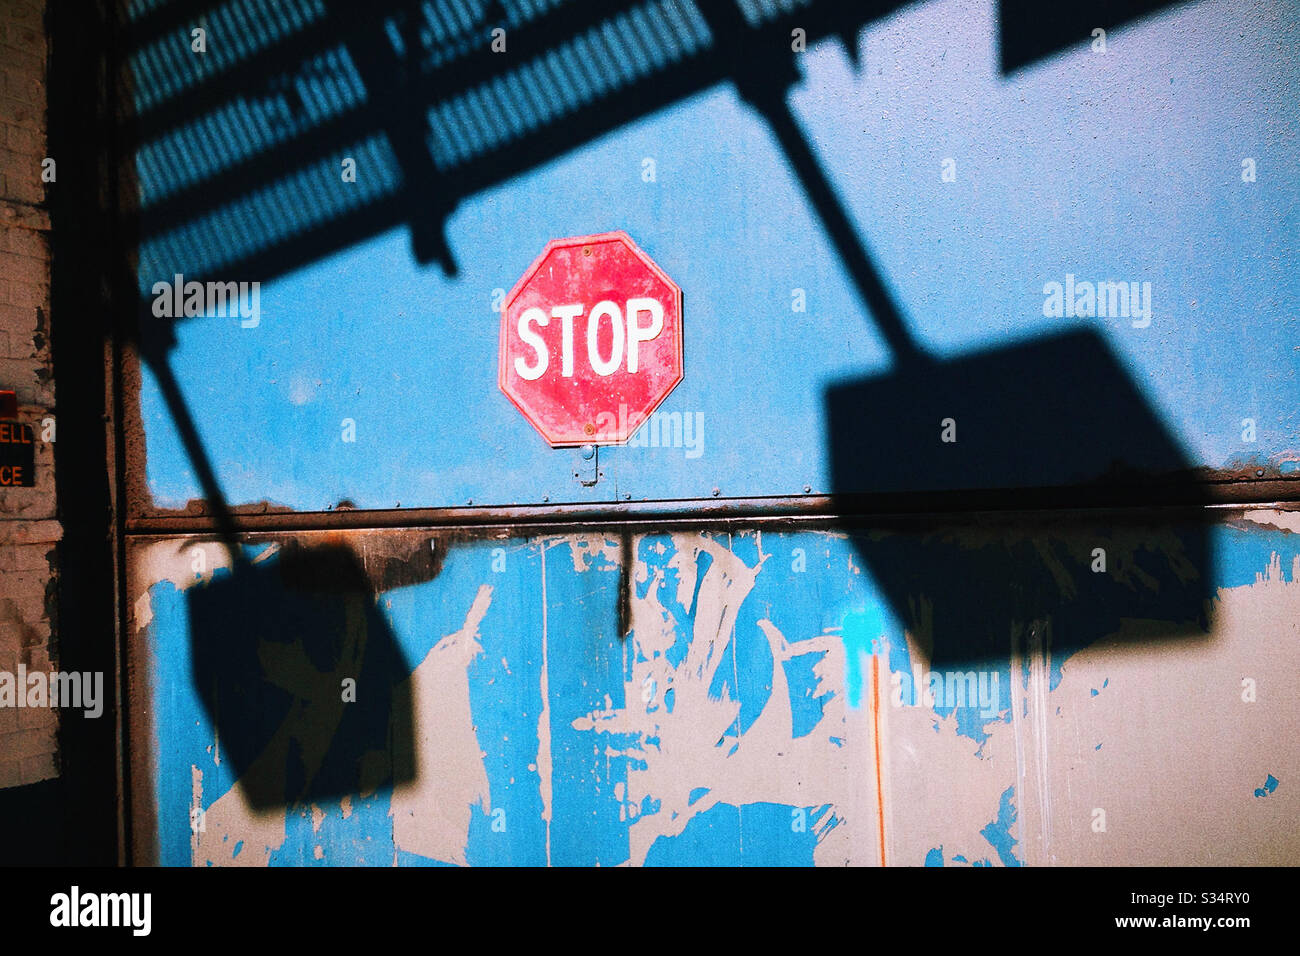 Stop Sign on Blue Garage Door with Peeling Paint Stock Photo